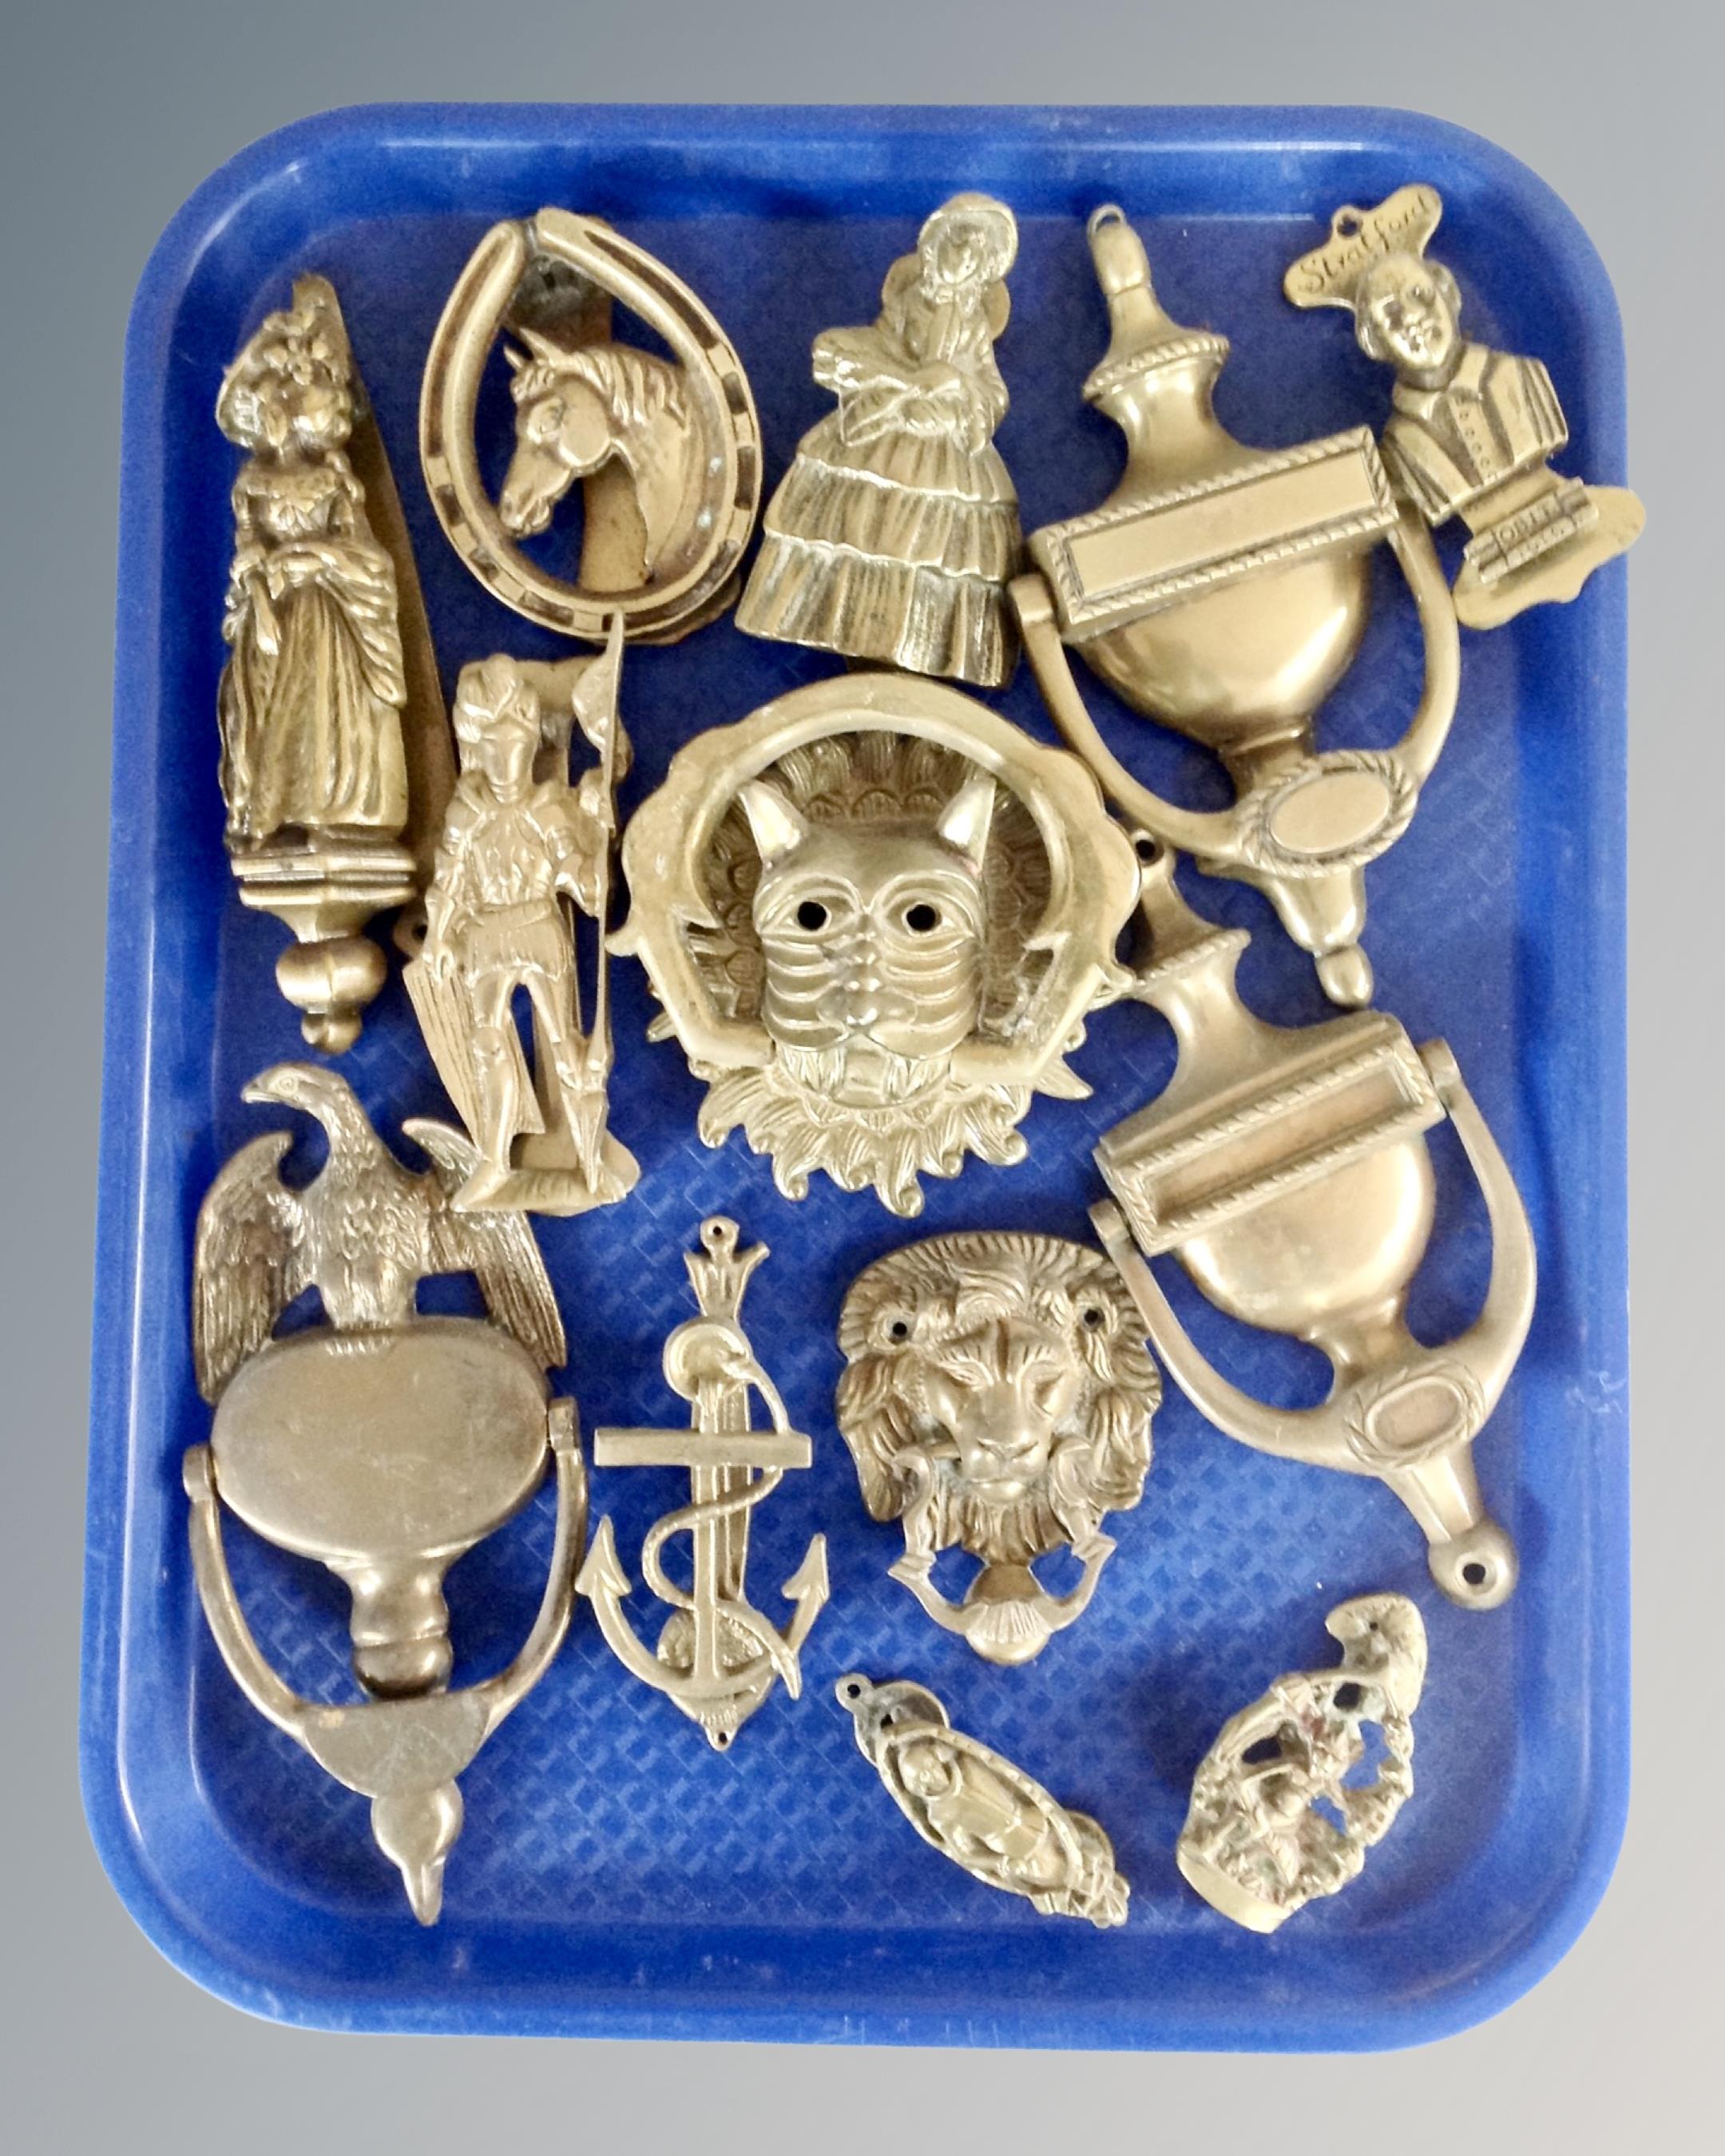 A tray of brass door knockers